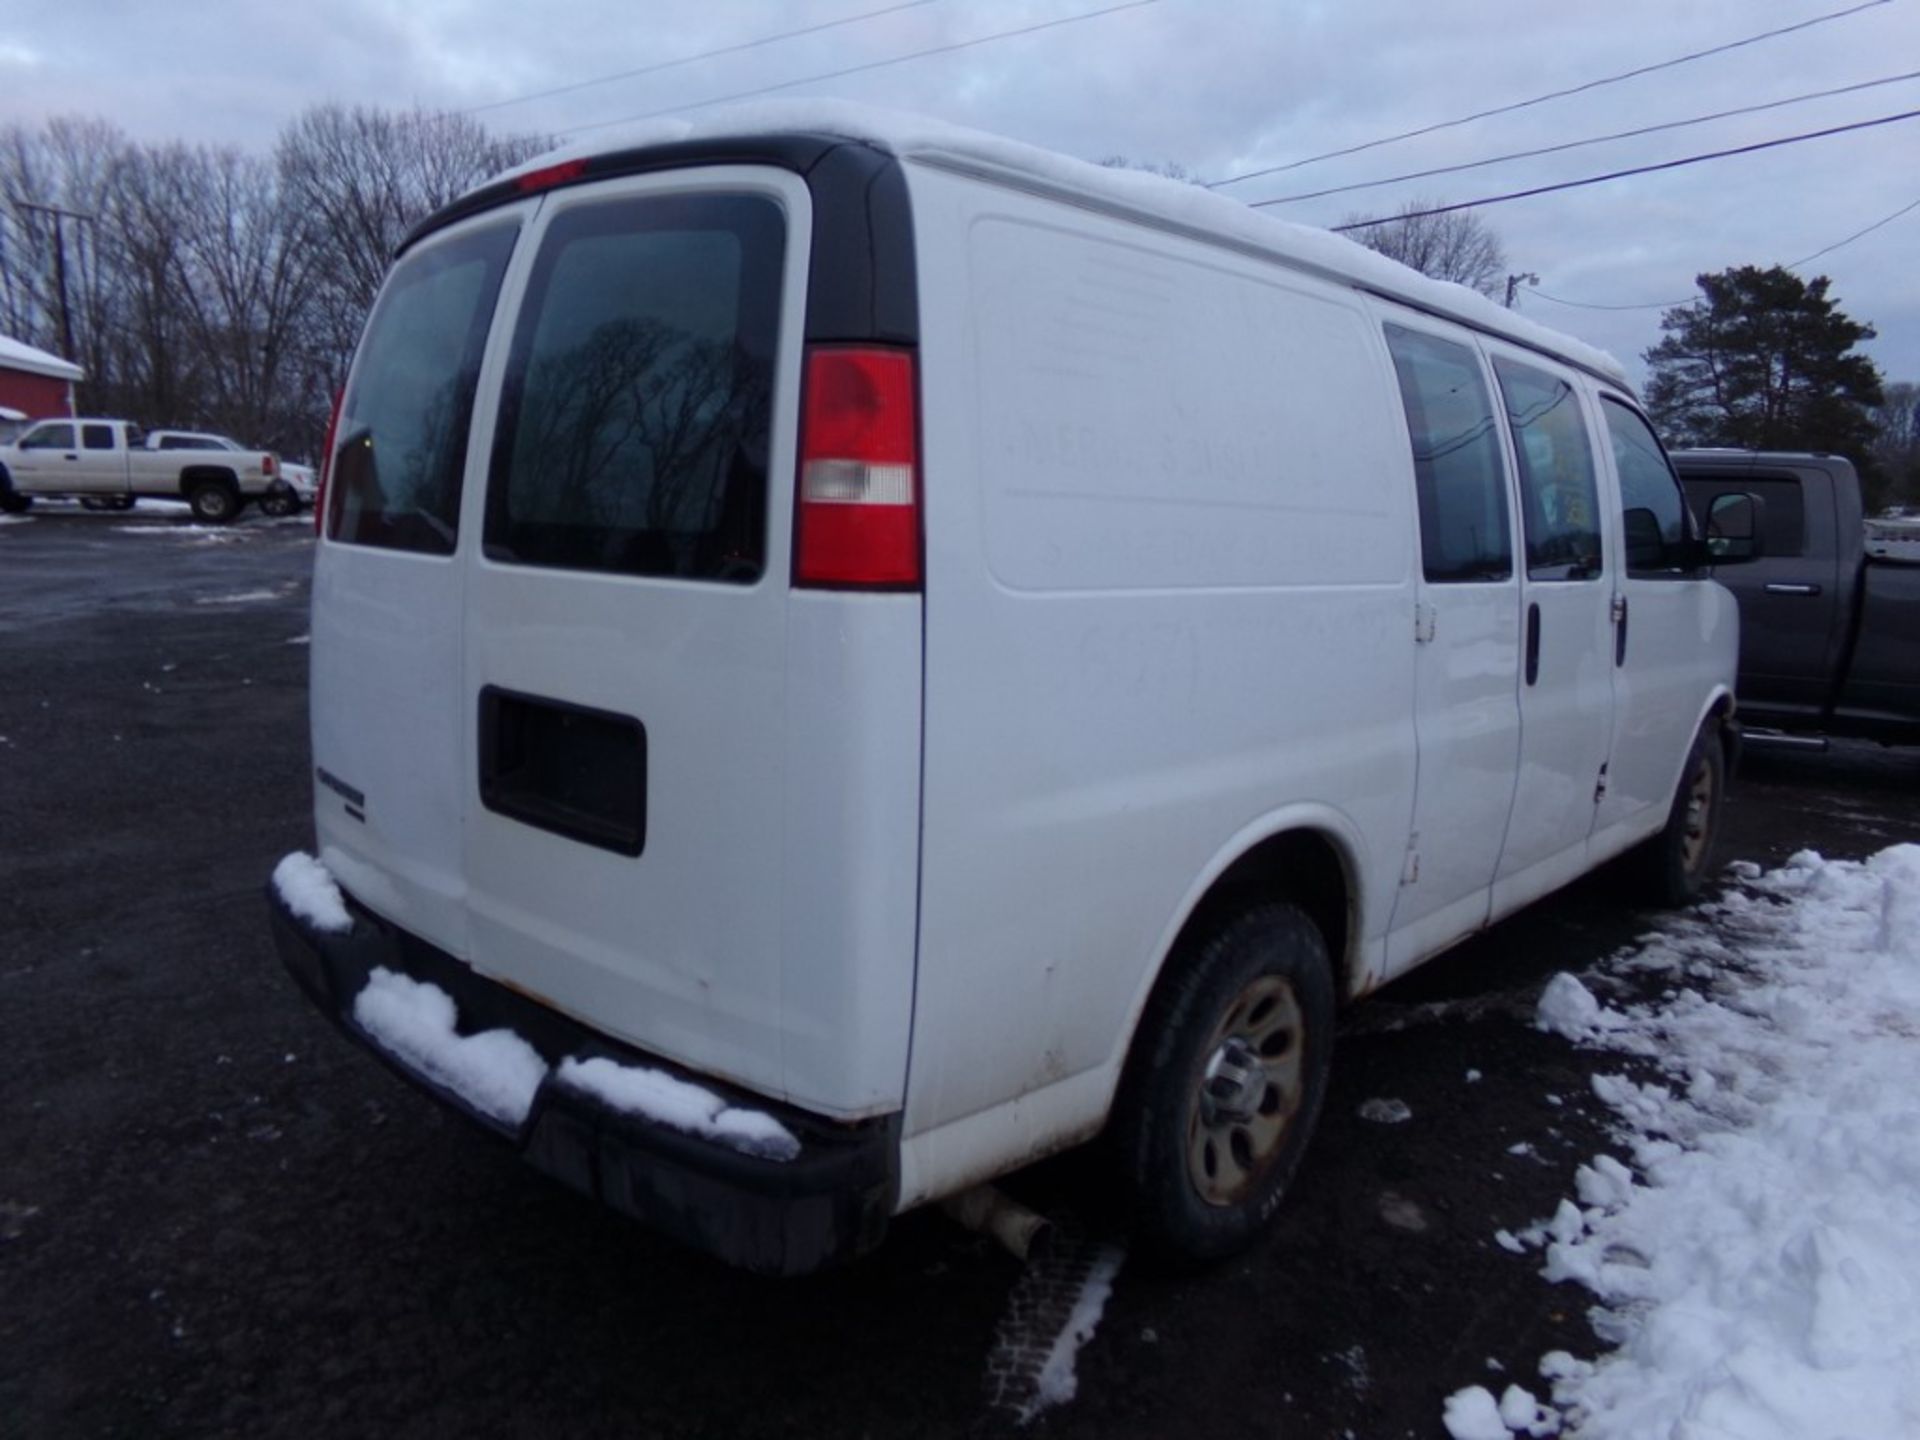 2012 Chevrolet G1500 Cargo Van, White, 258,499 Miles, VIN#: 1GCSGAFXXC1145690 - OPEN TO ALL - Image 3 of 10